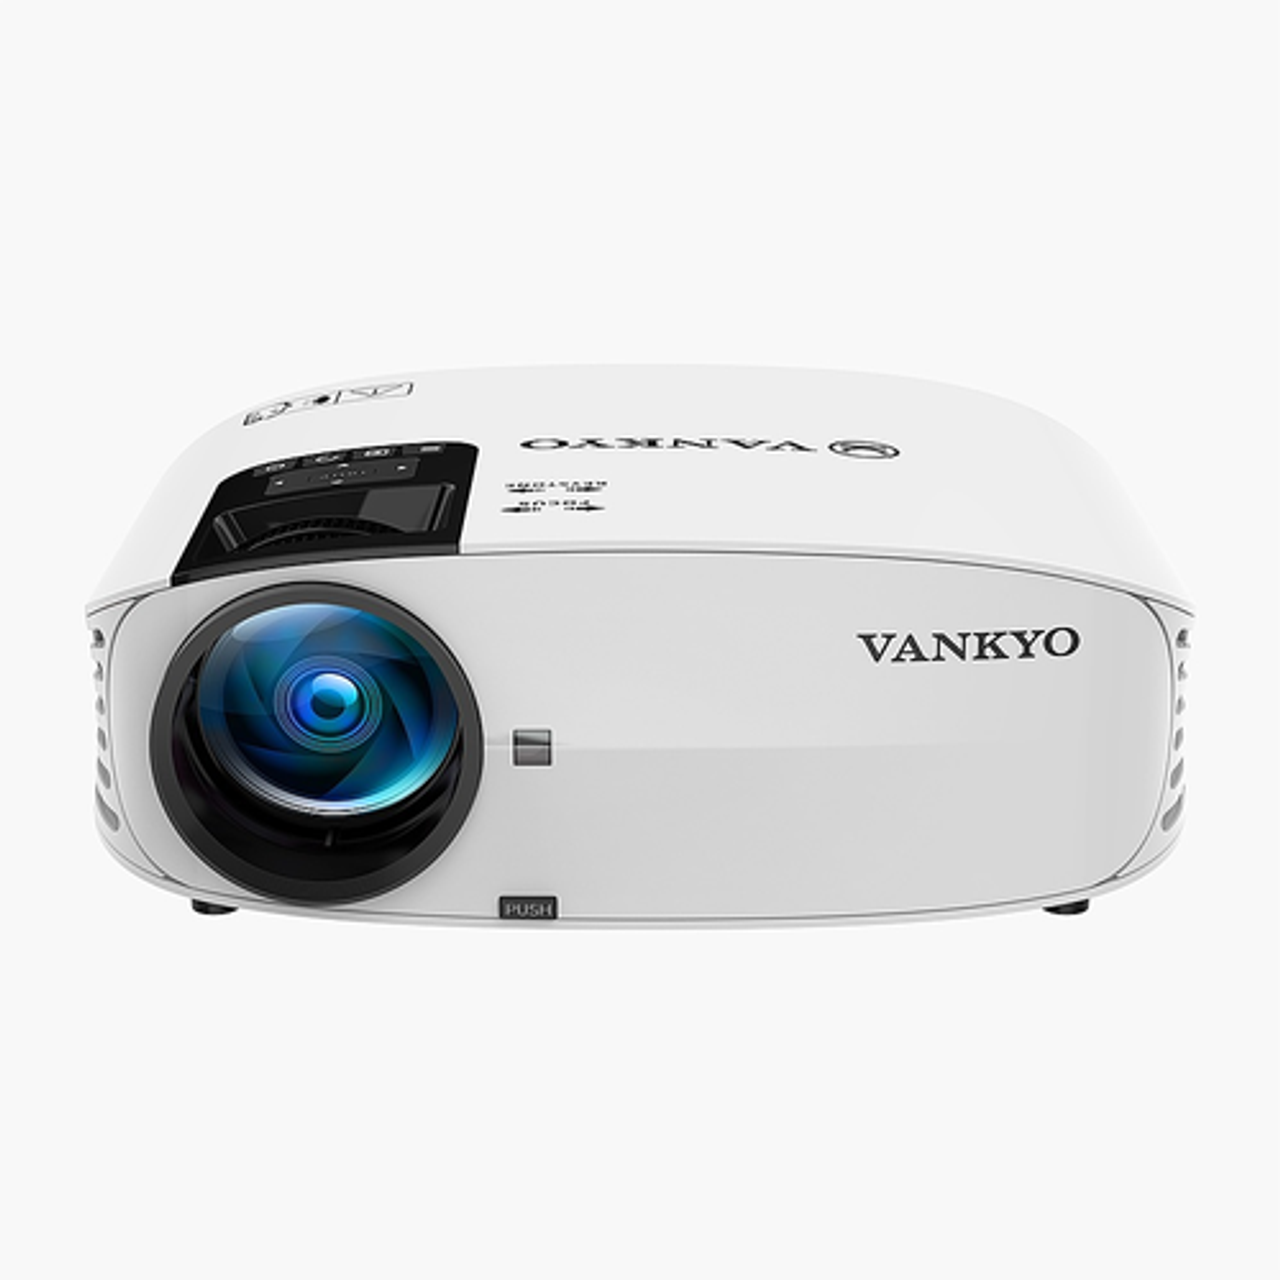 Vankyo - Leisure 510PW 1080P Wireless Projector - WHITE